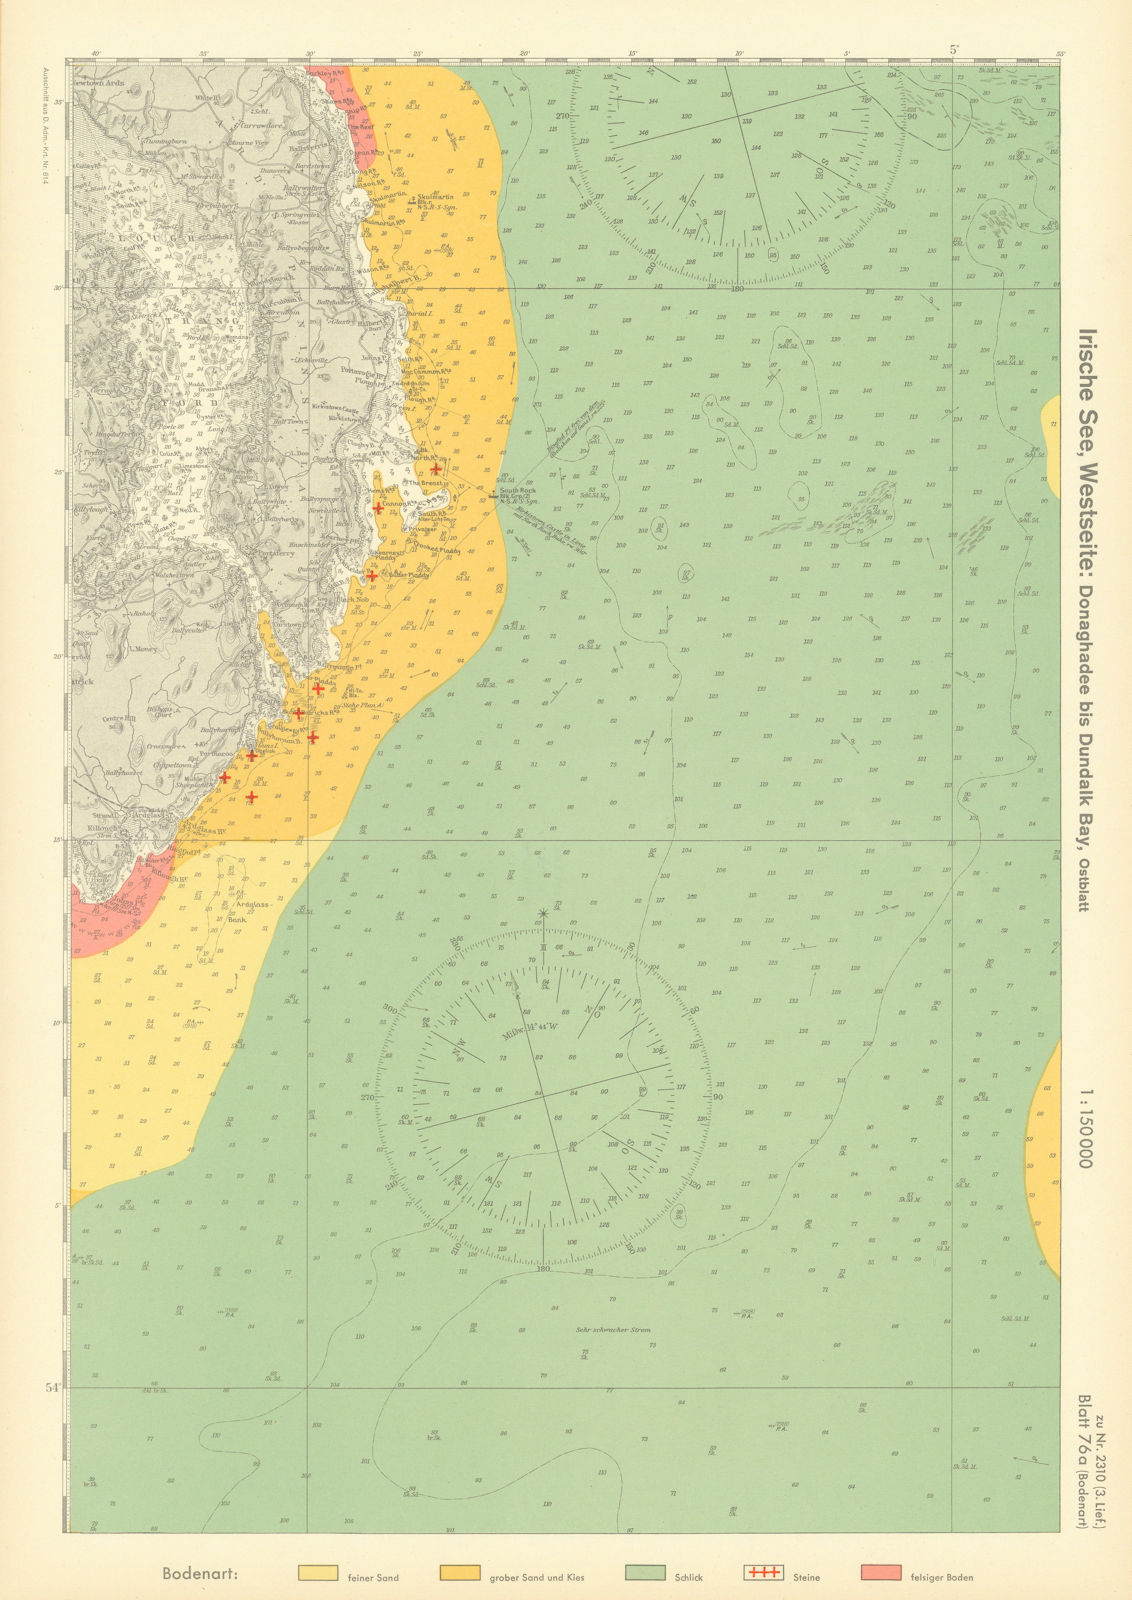 76a County Down coast Strangford Lough Ards Peninsula KRIEGSMARINE Nazi map 1940